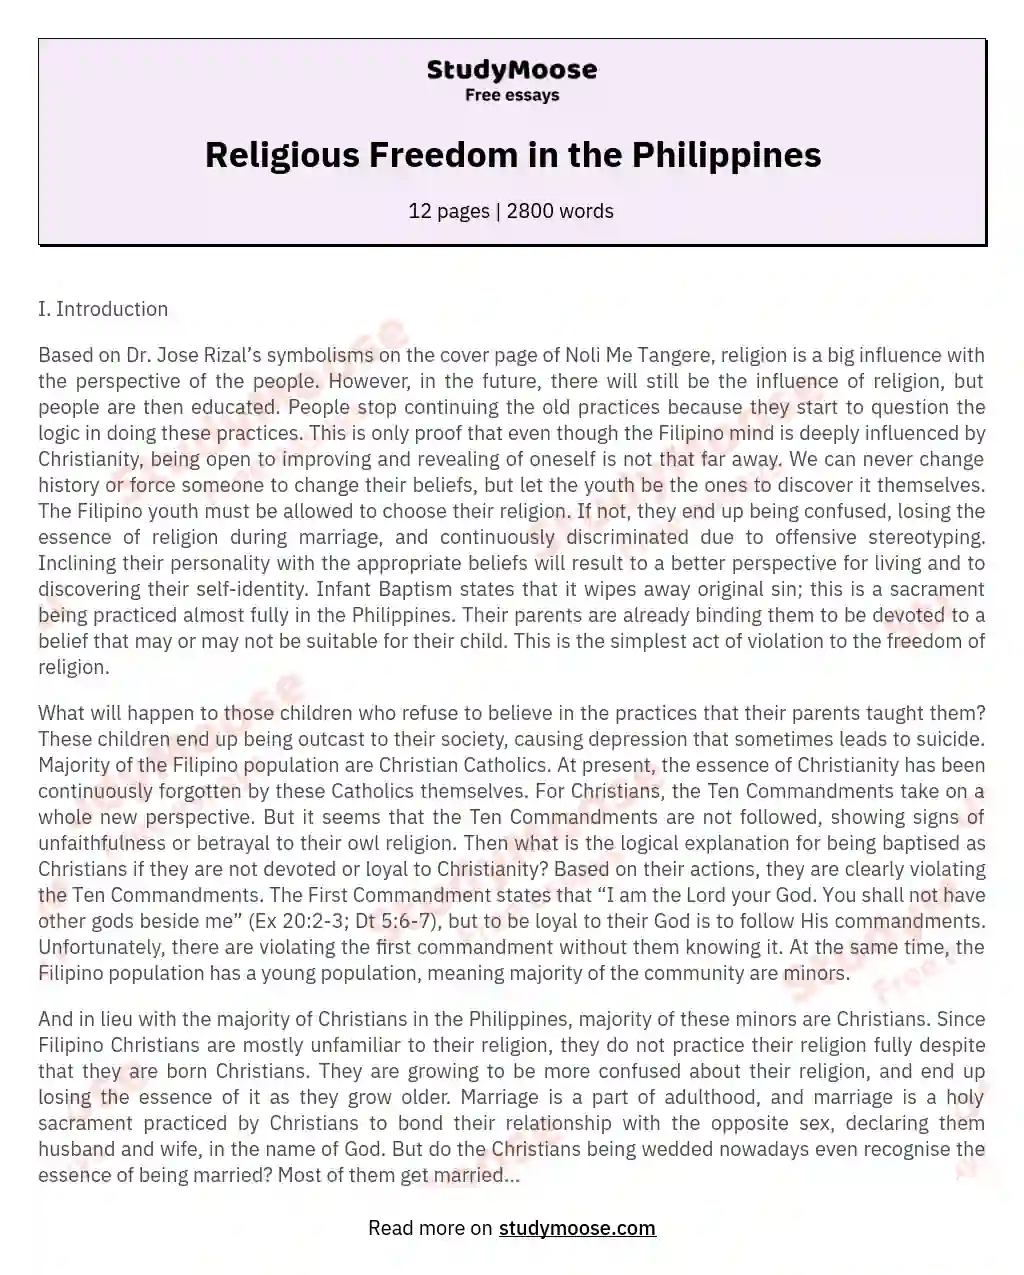 Religious Freedom in the Philippines essay